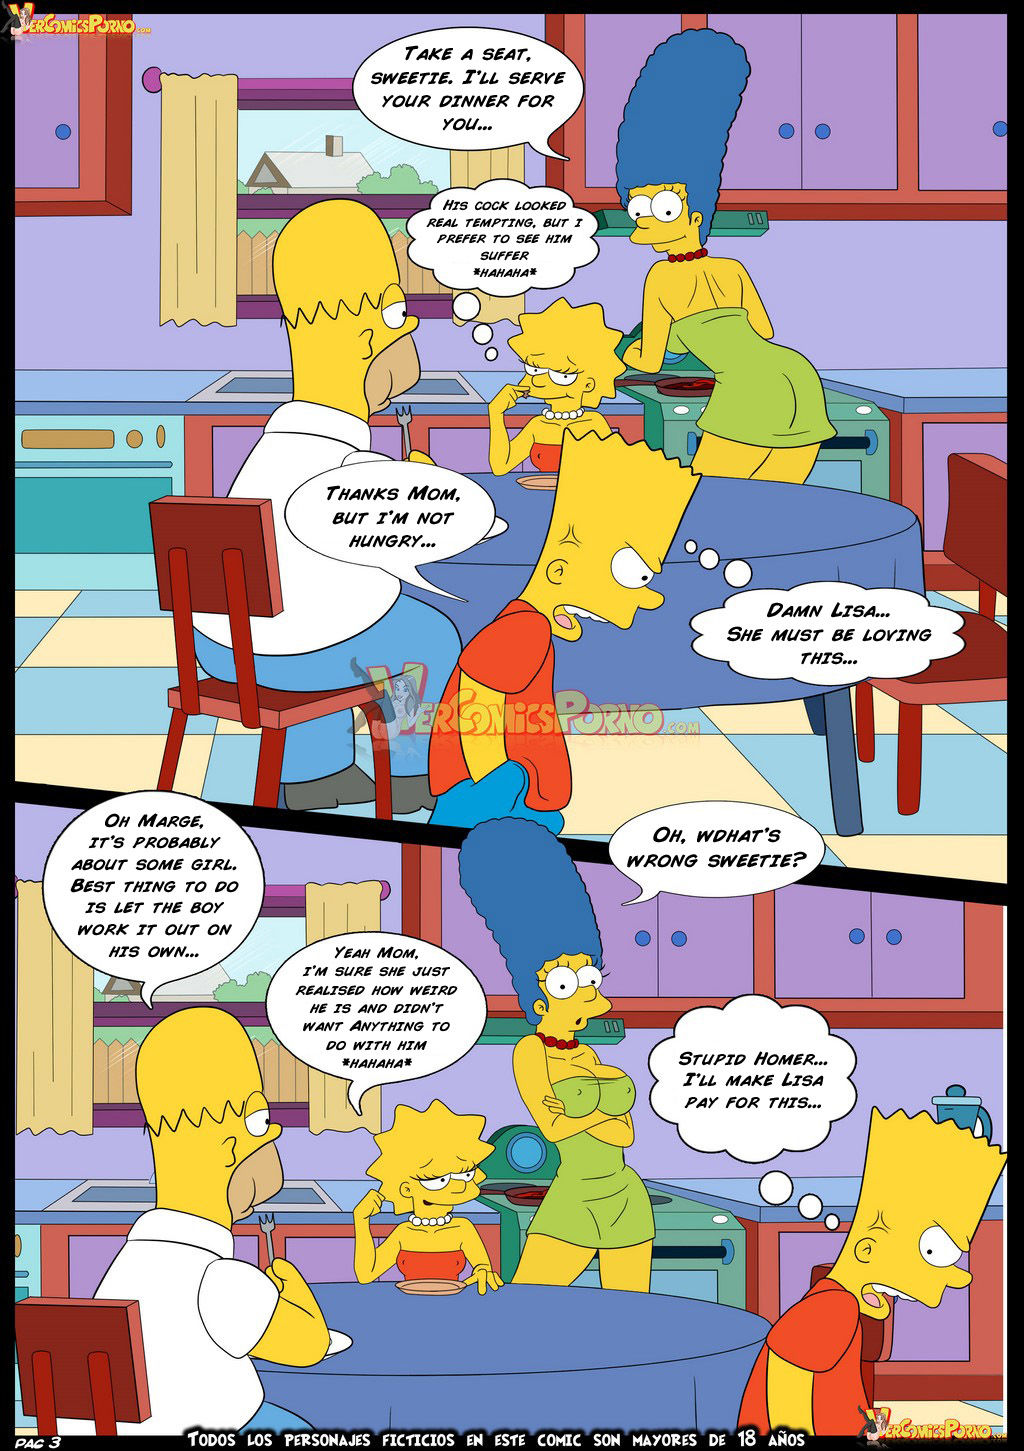 [CROC] The Simpsons / Futurama - Future purchase page 4